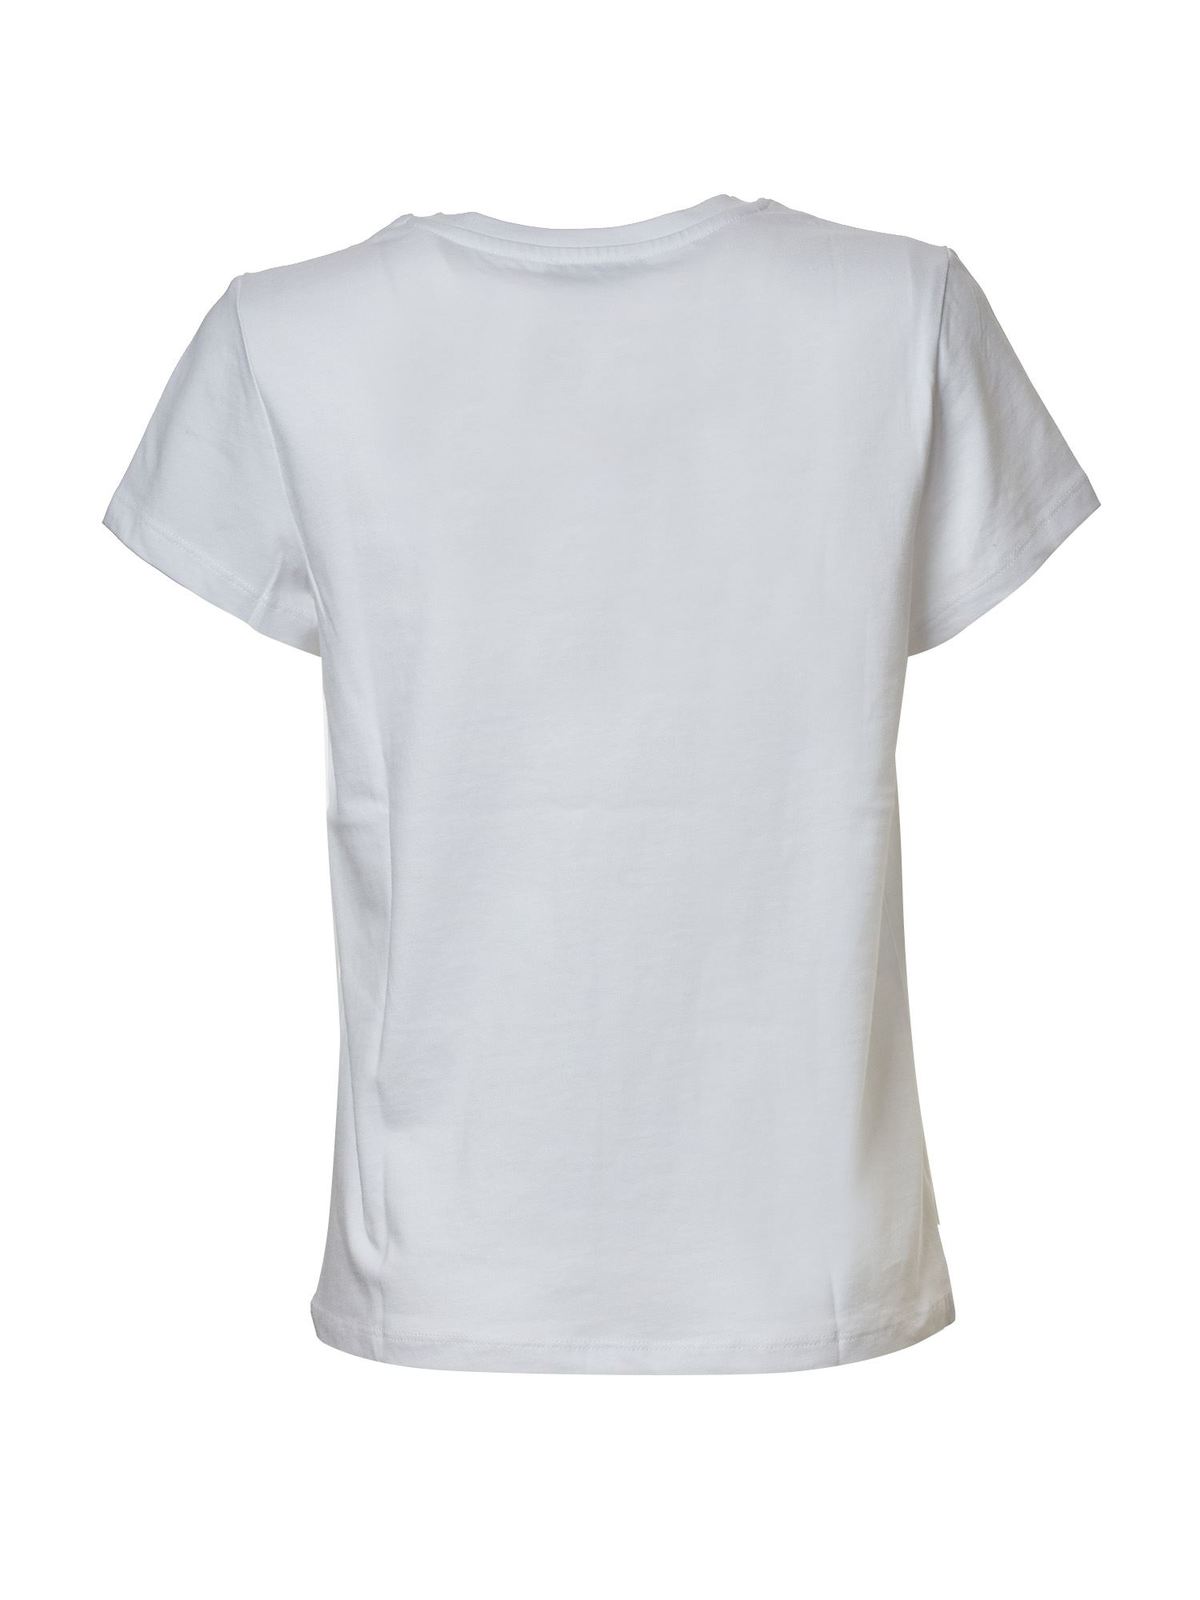 T-shirts A.P.C. - Logo t-shirt in white and blue - COBQXF26588 | iKRIX.com